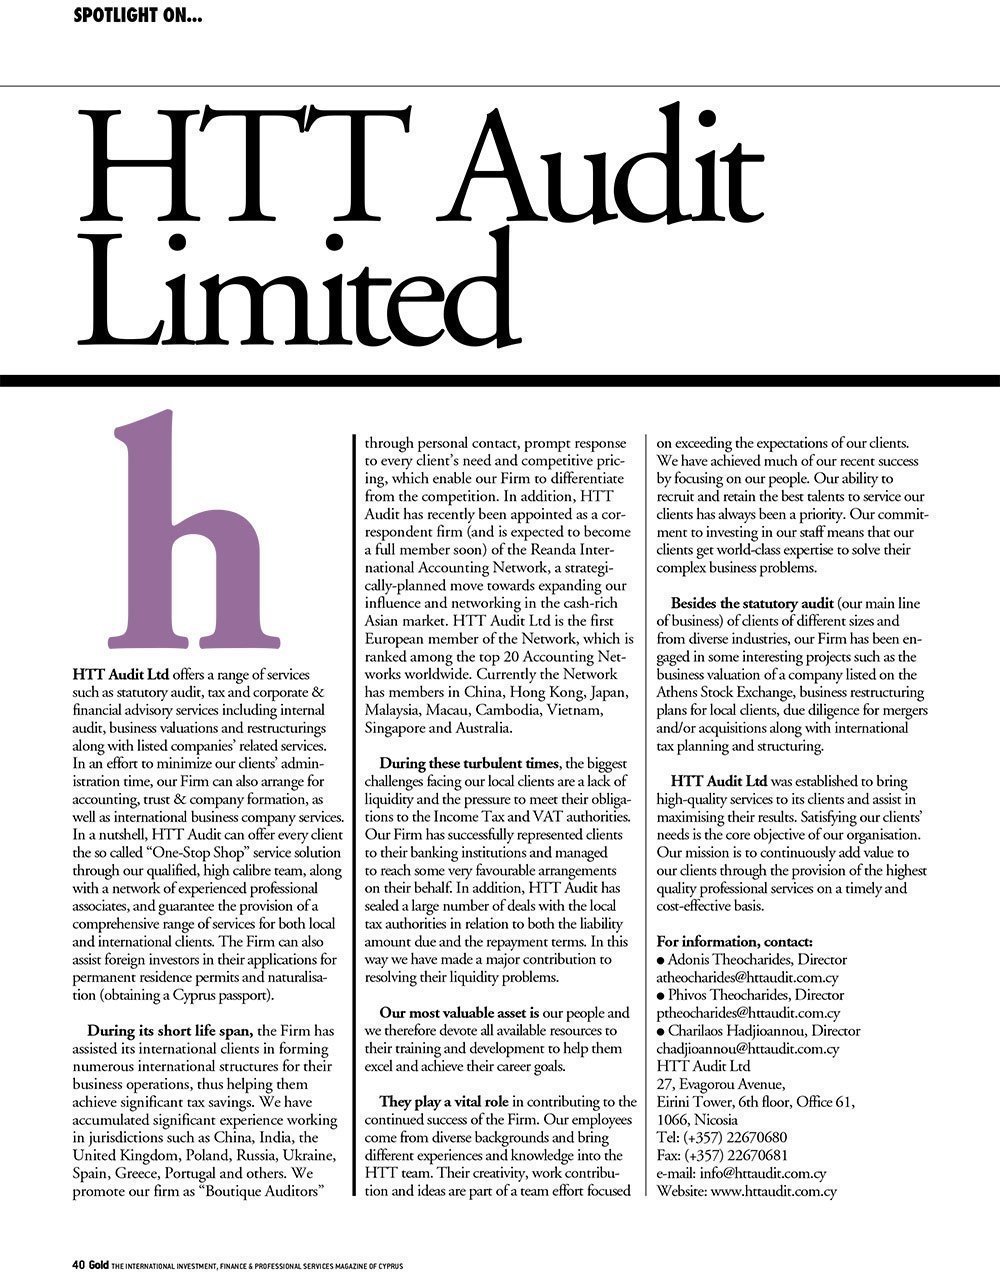 Spotlight-on-HTT-Audit-Limited-gold-Magazine-July-Edition-1